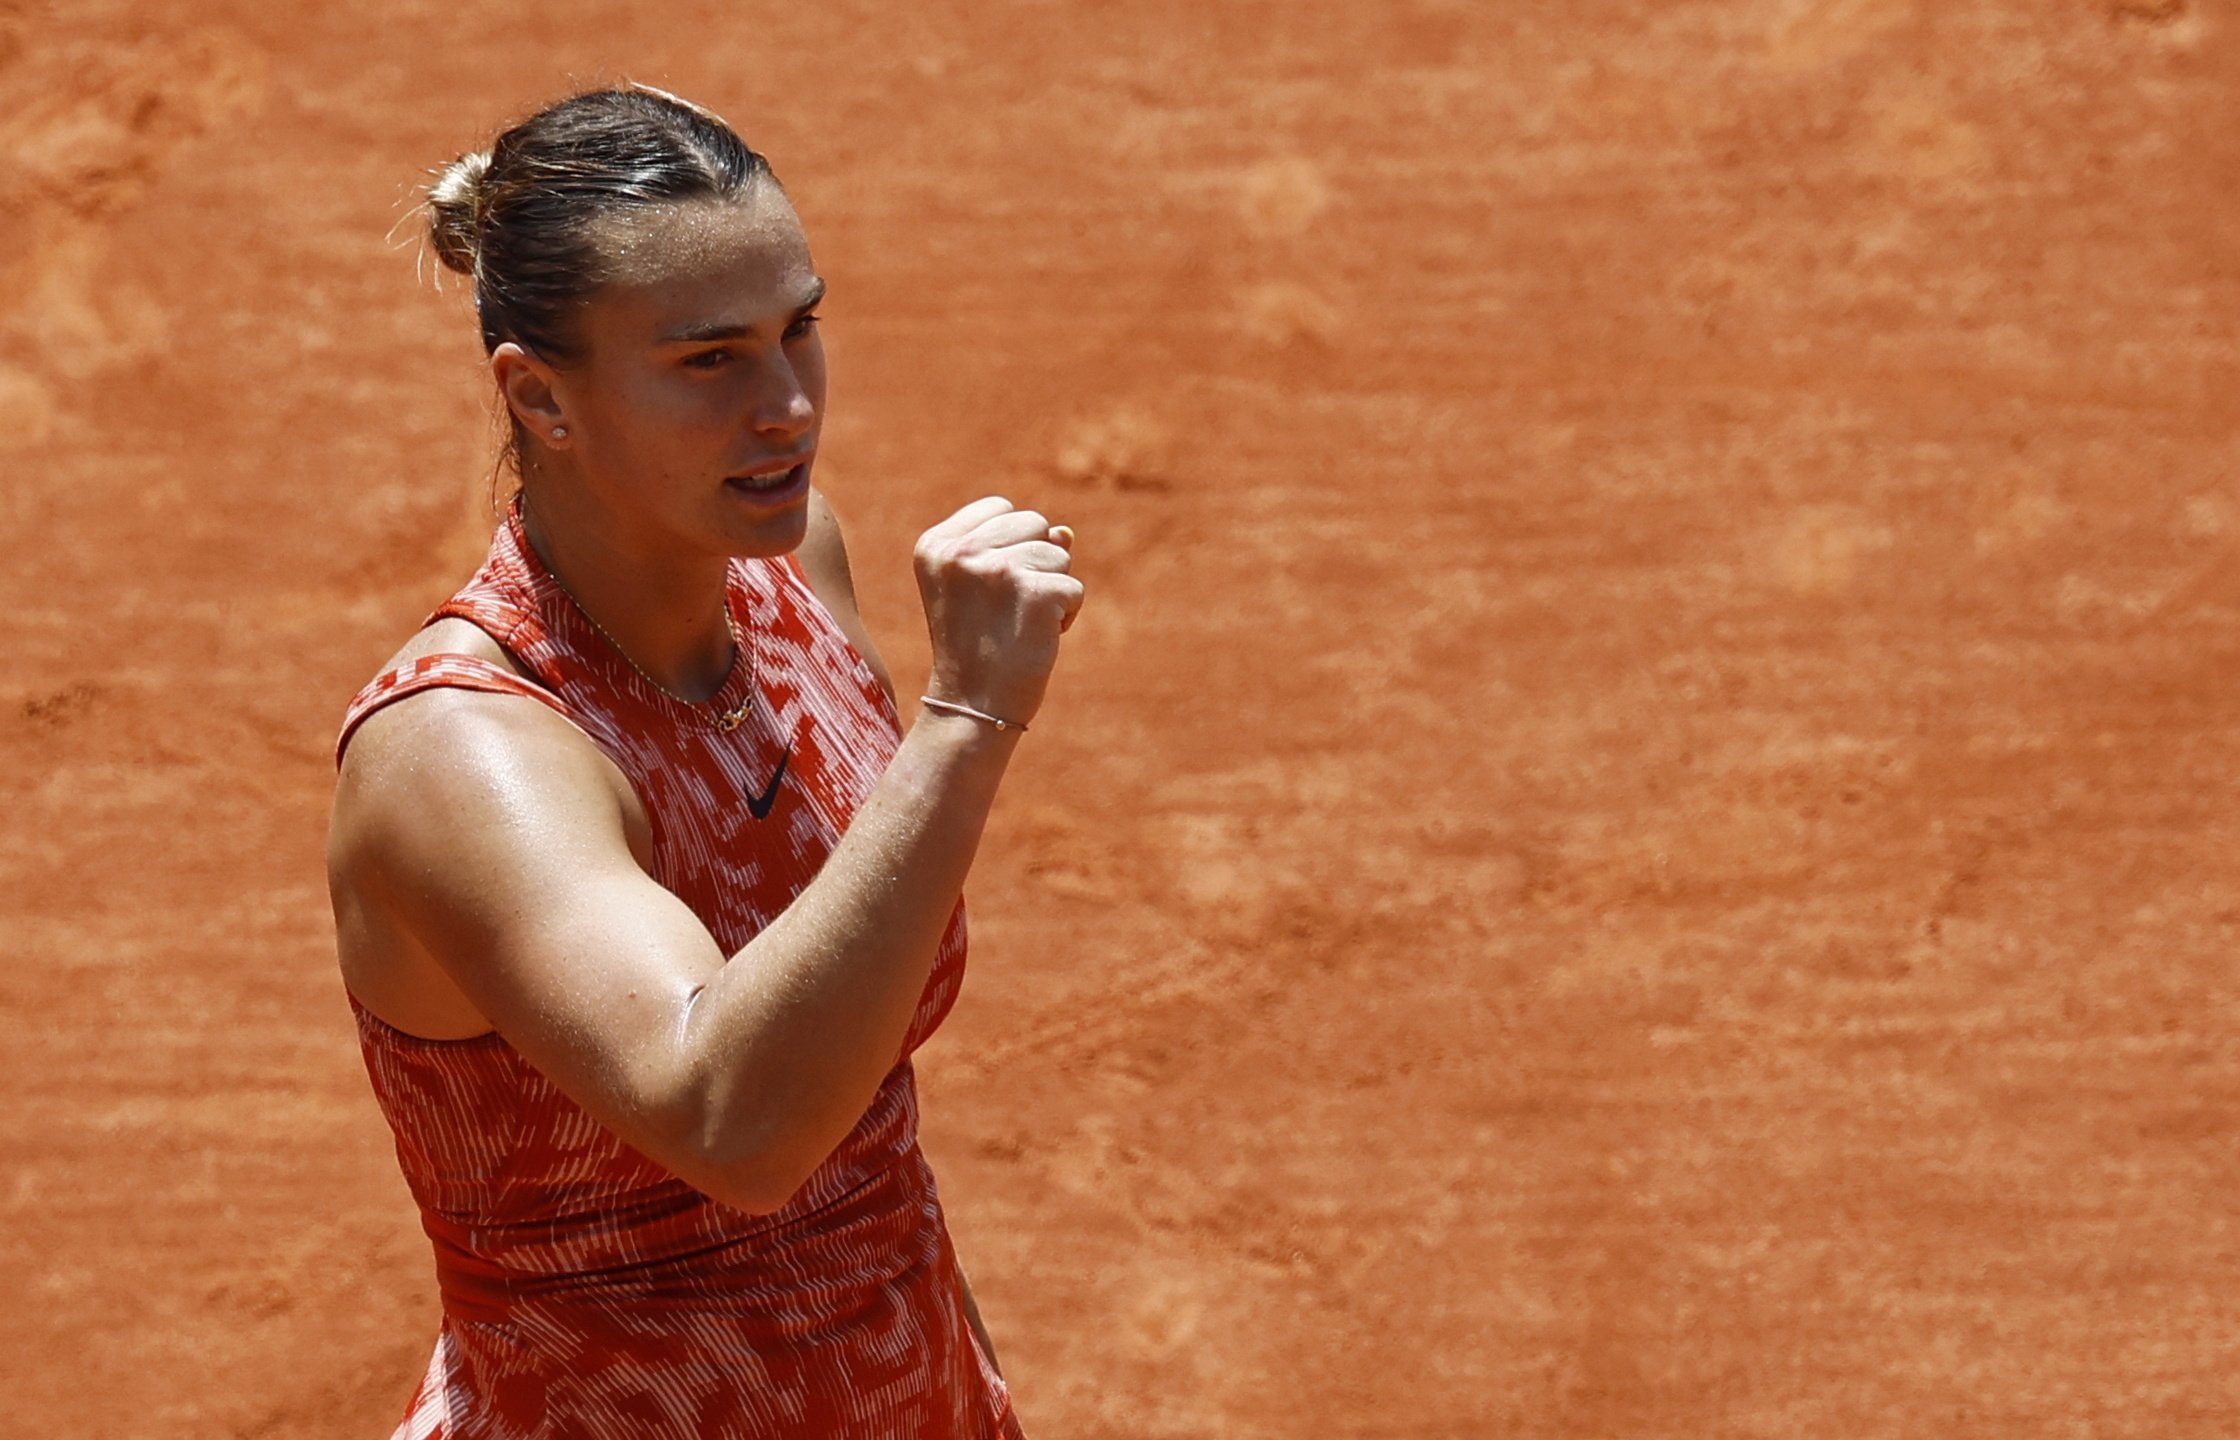 Aryna Sabalenka celebrates after overcoming Emma Navarro in the French Open round of 16. Photo: EPA